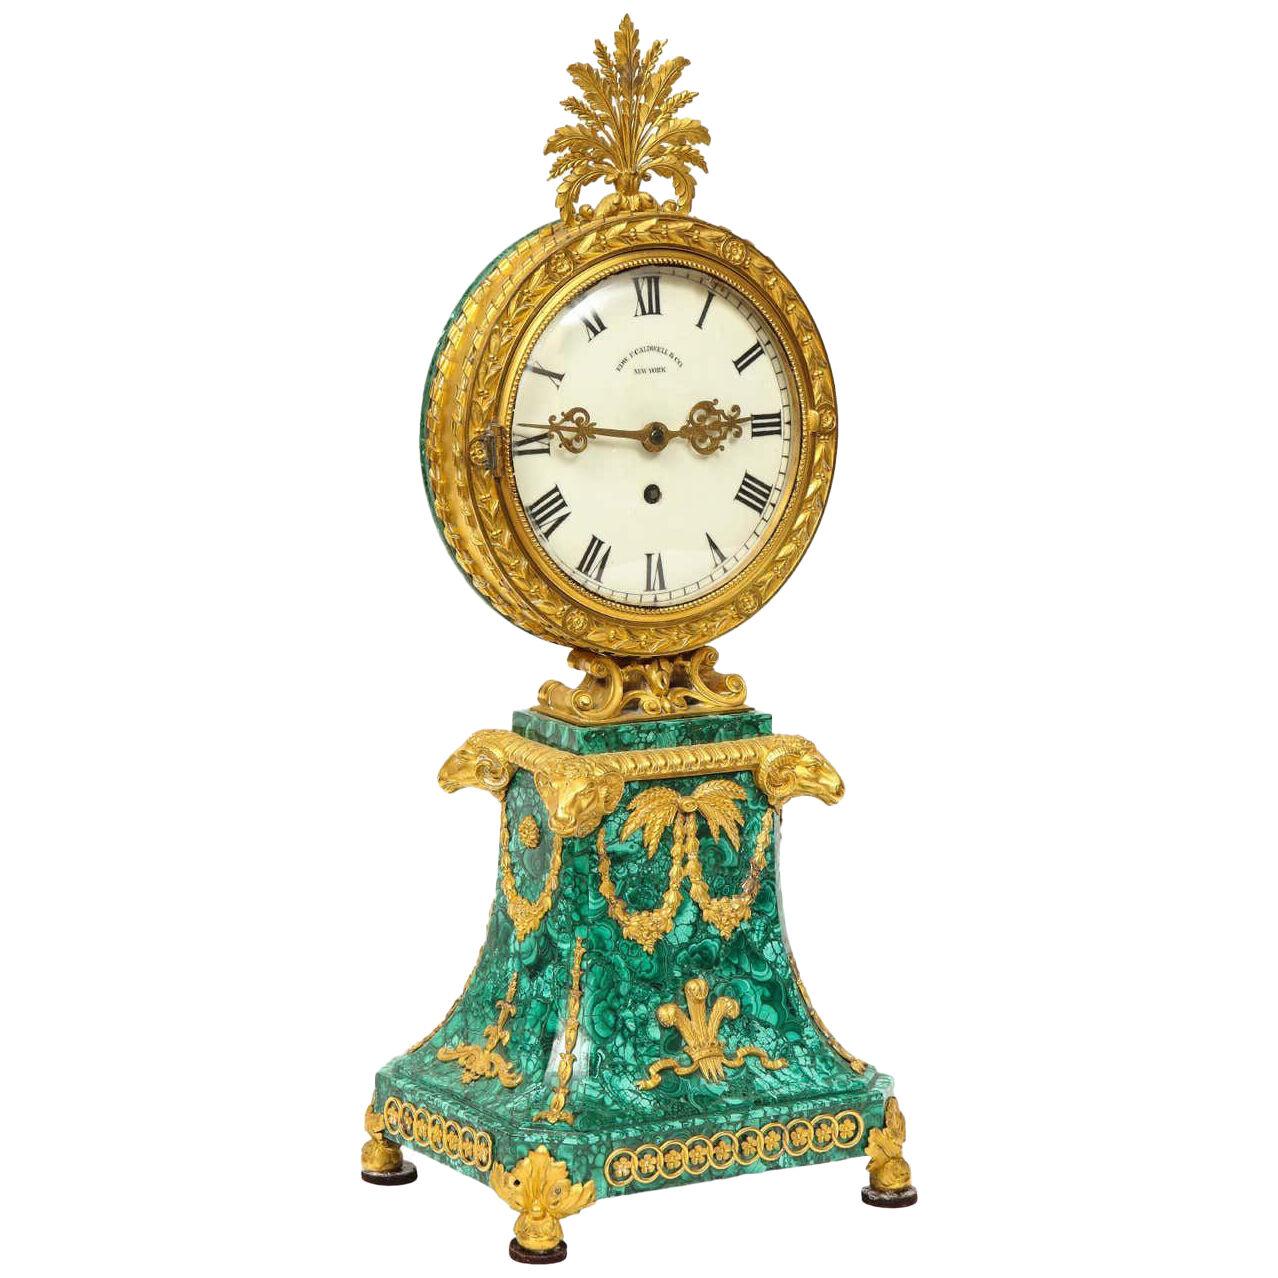 Edward F. Caldwell, An Extremely Fine and Rare Ormolu-Mounted Malachite Clock